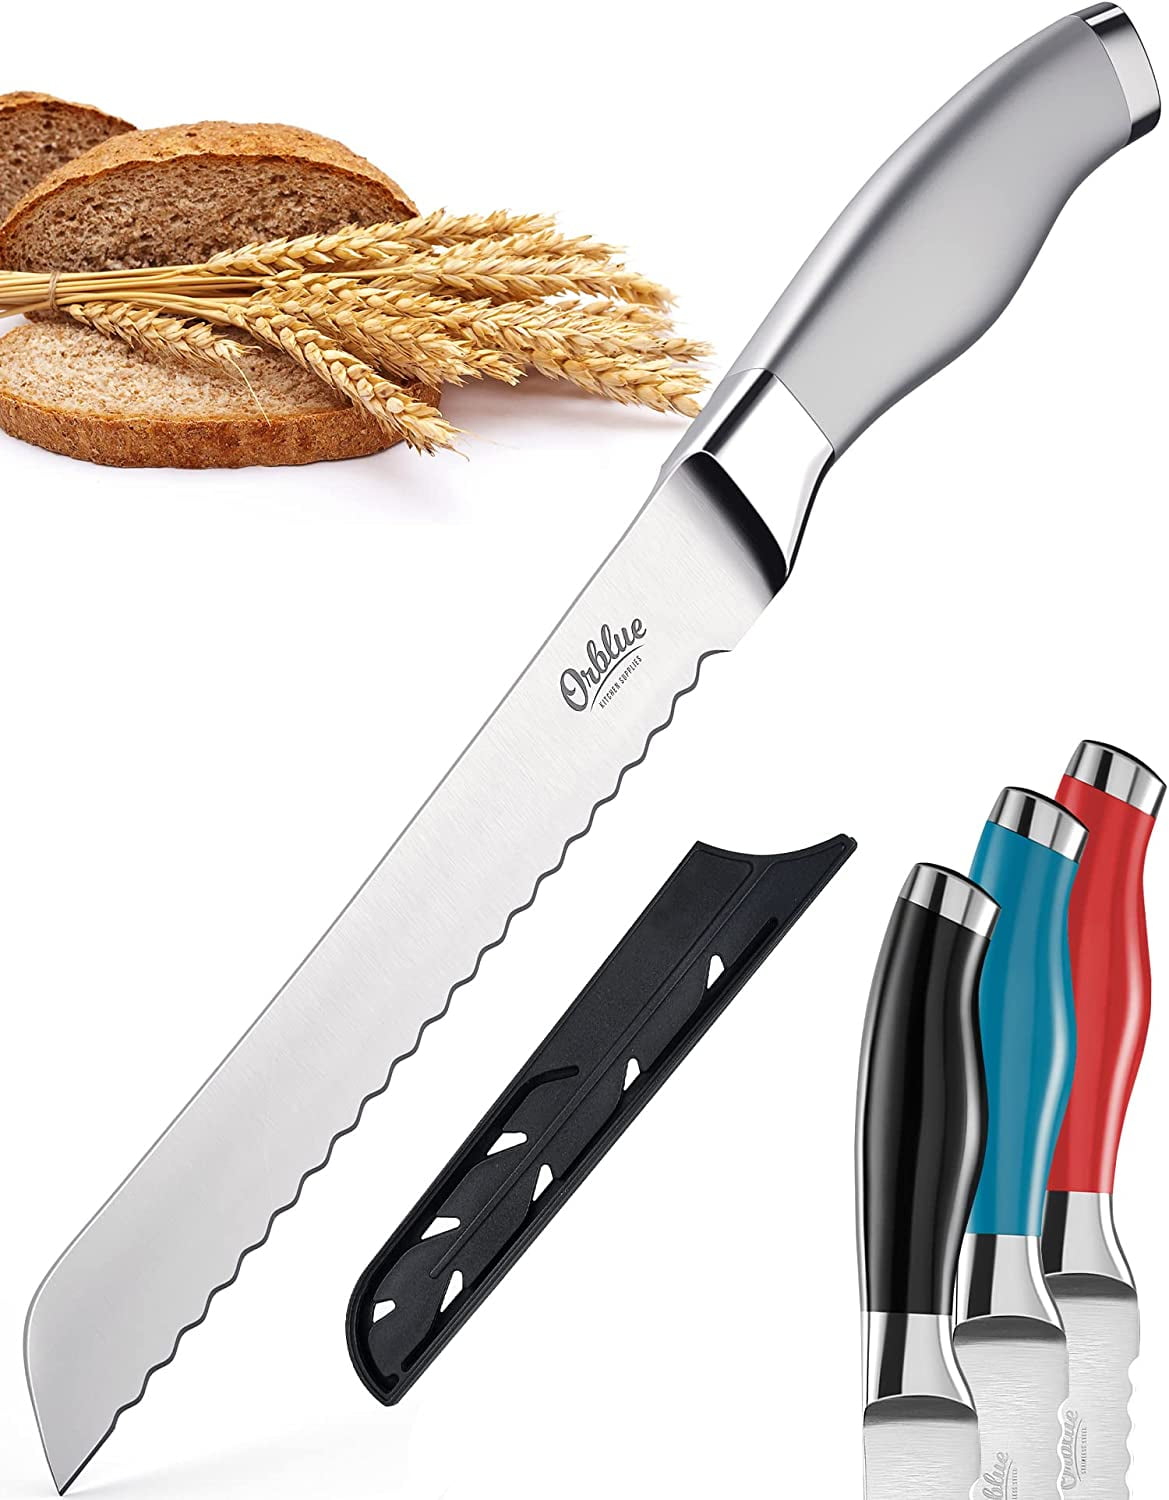 ProctorSilex Kitchen Collection Knives Tongs & More 